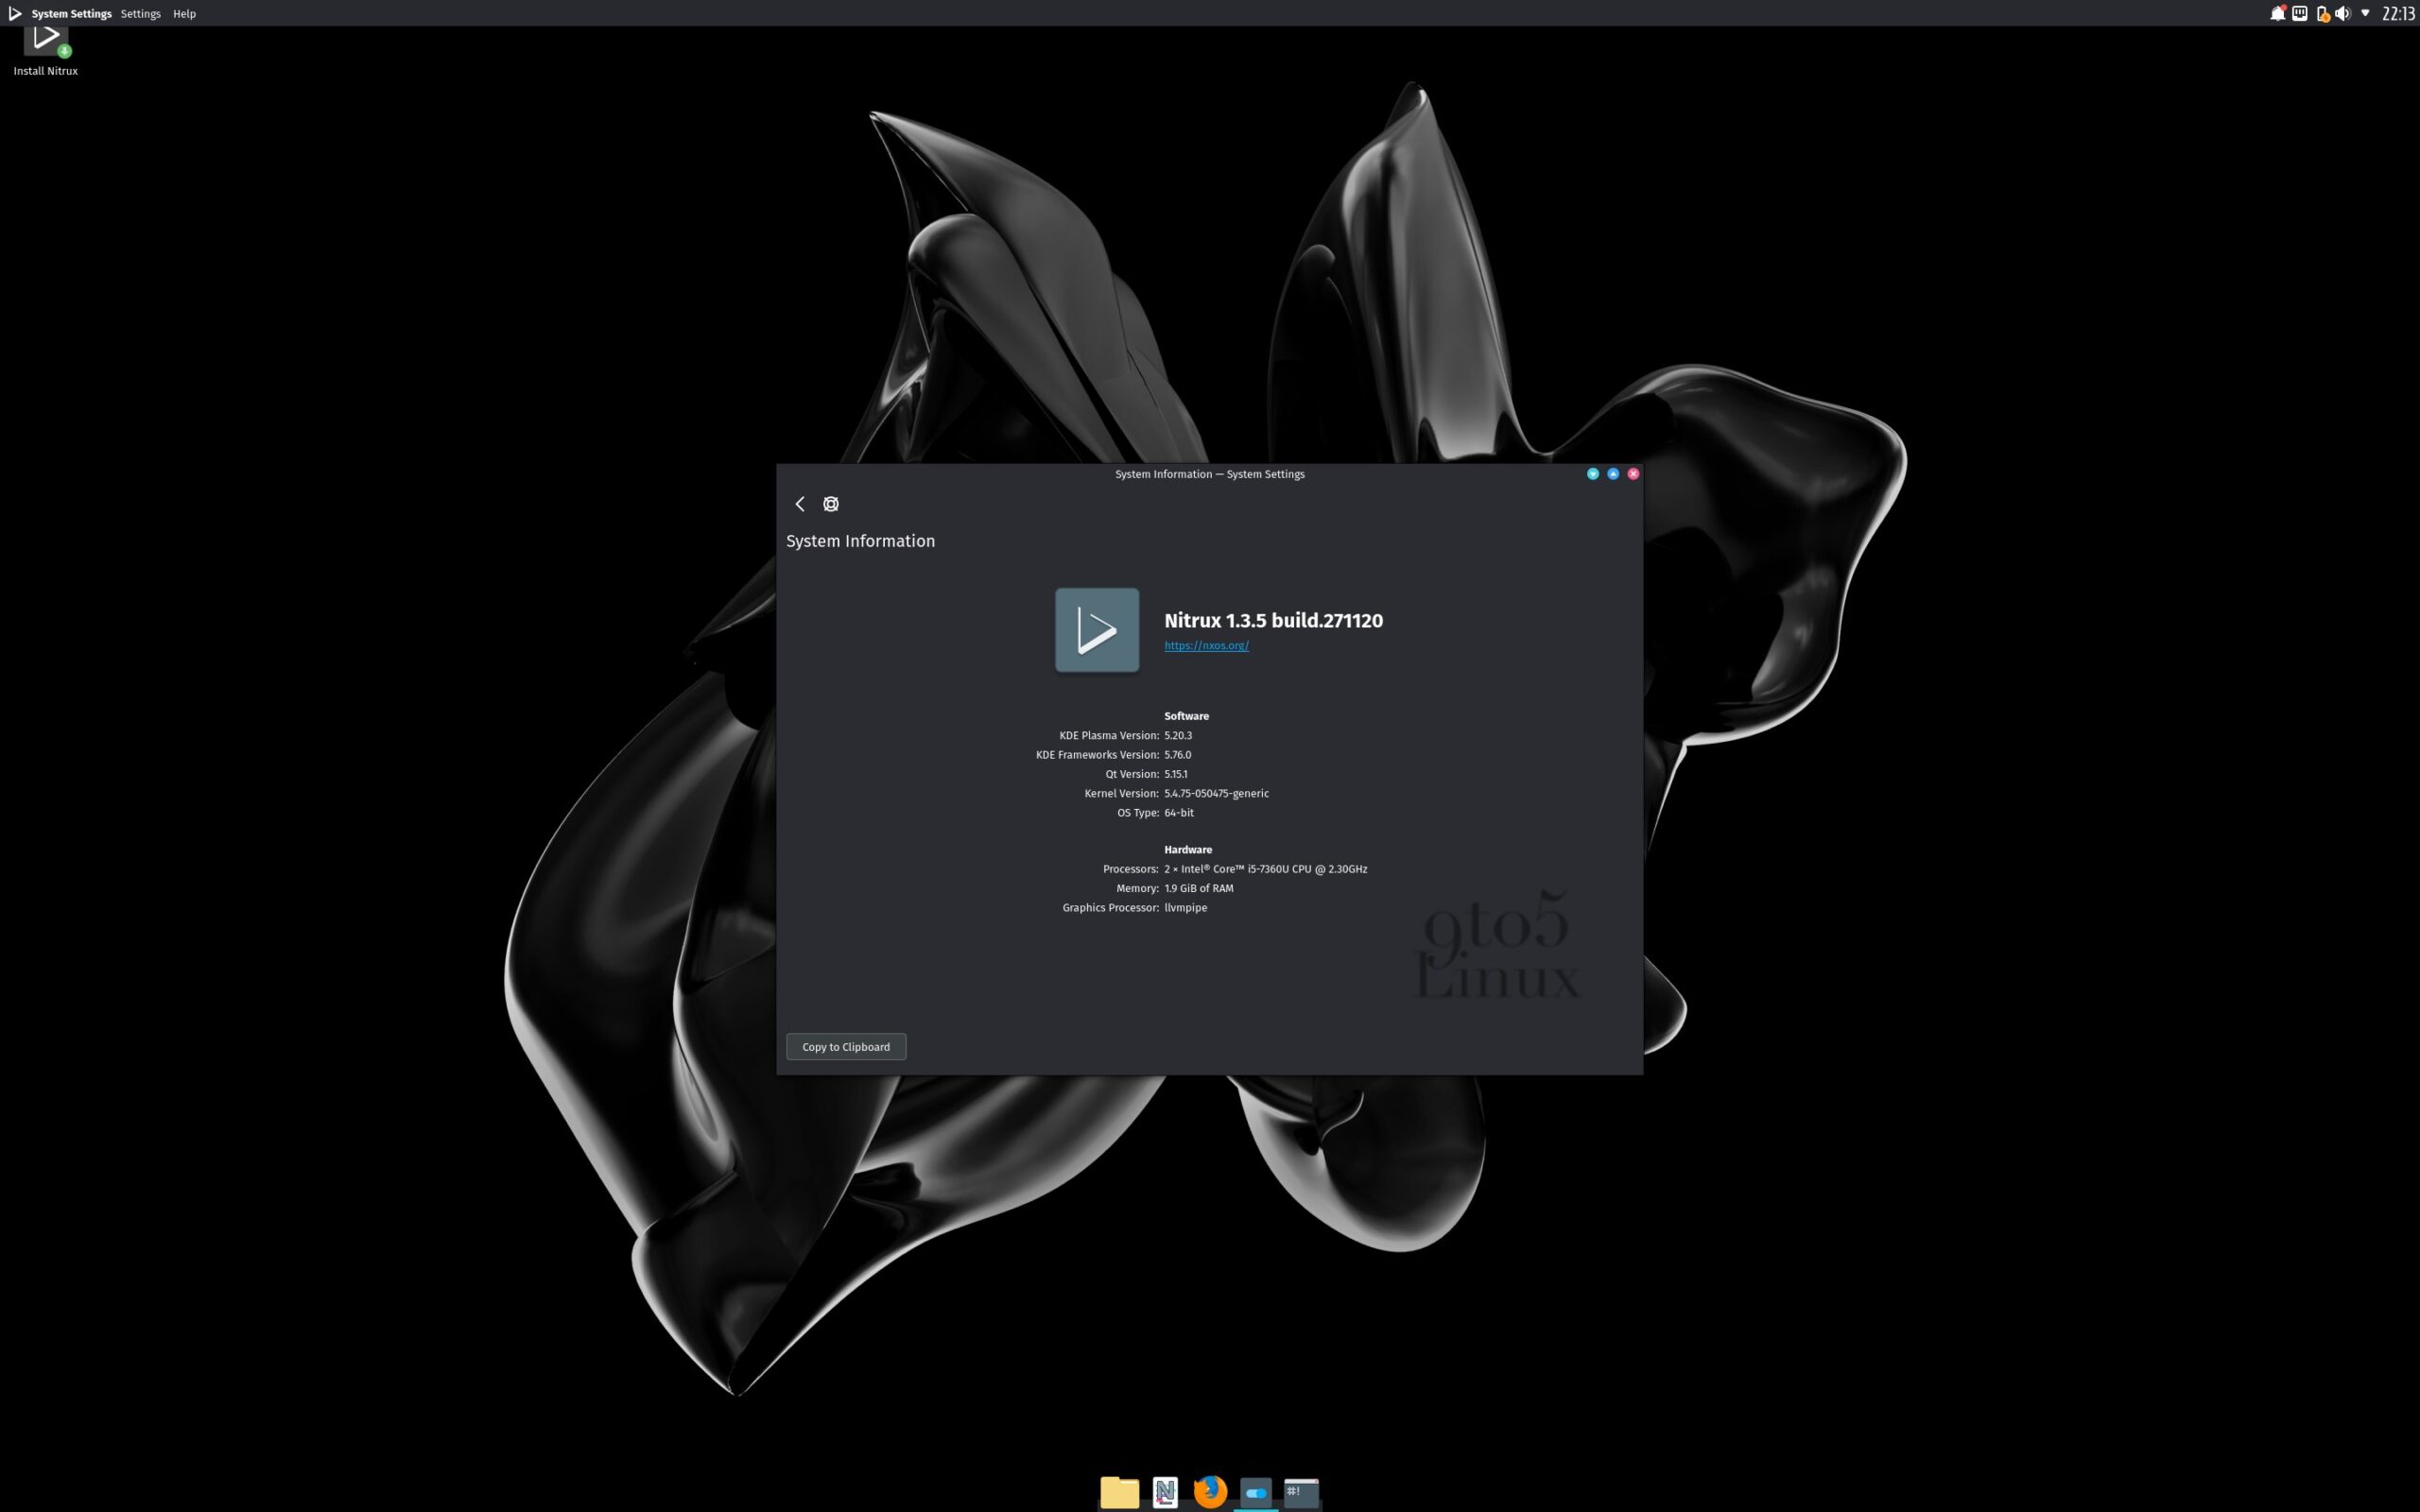 Nitrux 1.3.5 Brings More Portable Apps, Latest KDE Plasma Desktop